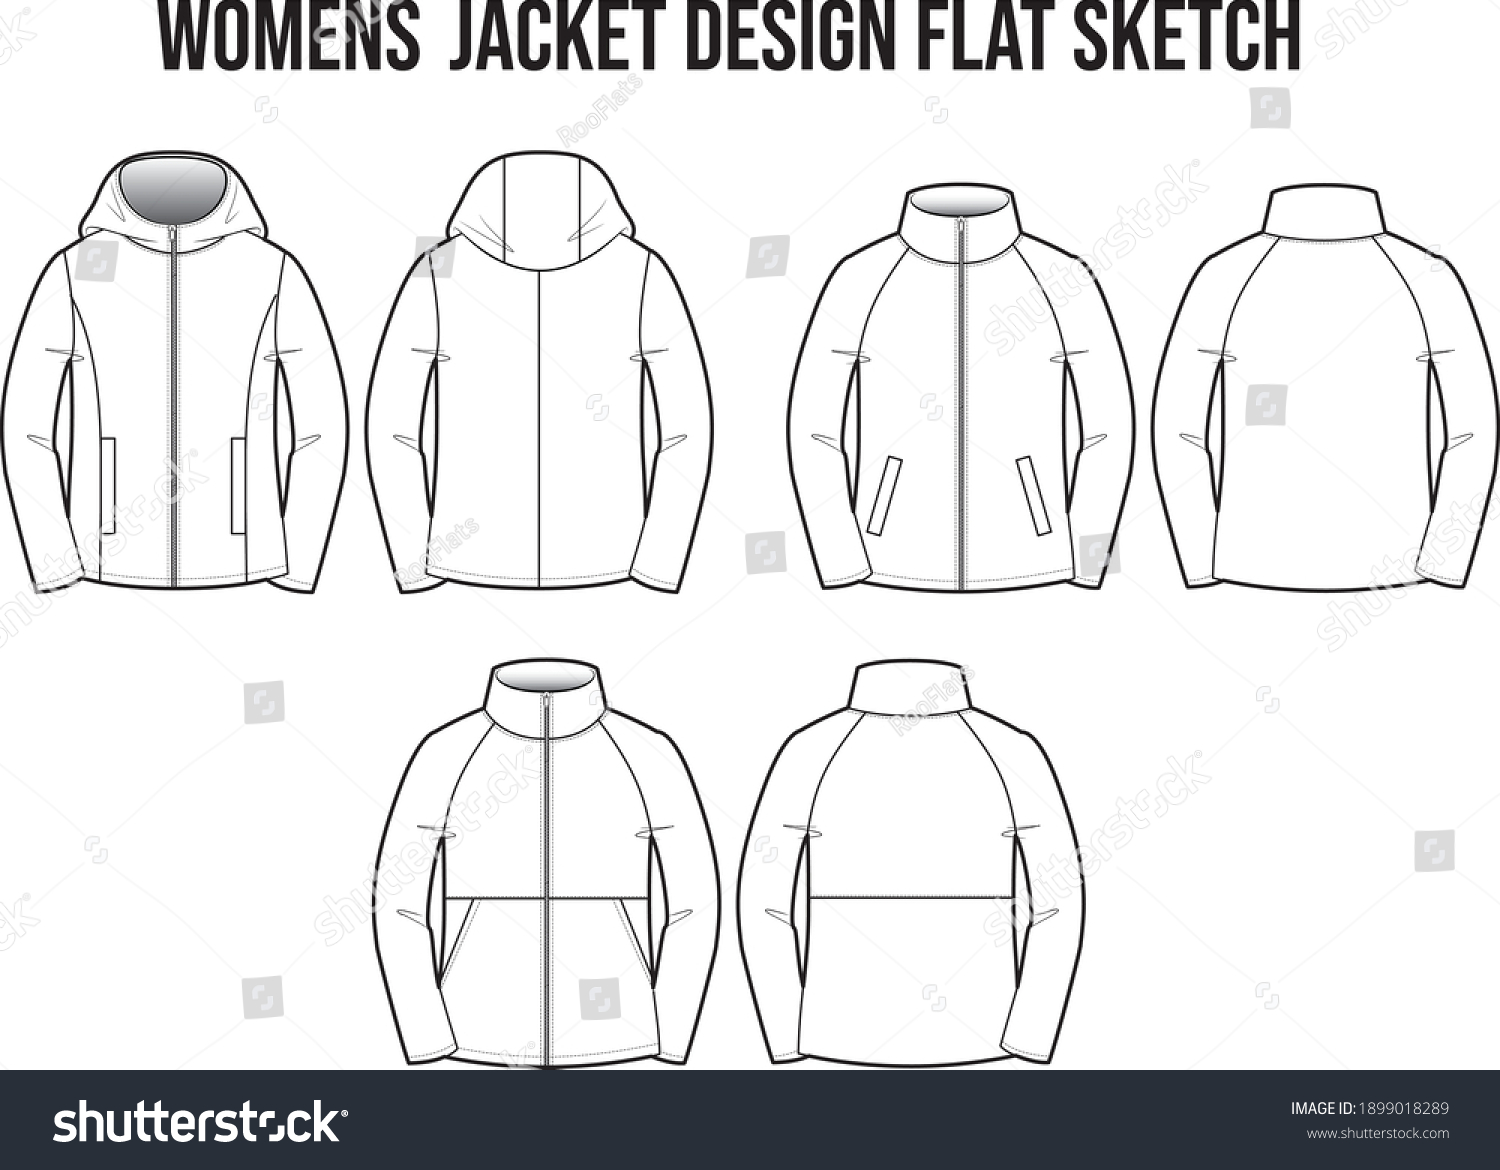 10,030 Womens jackets Images, Stock Photos & Vectors | Shutterstock